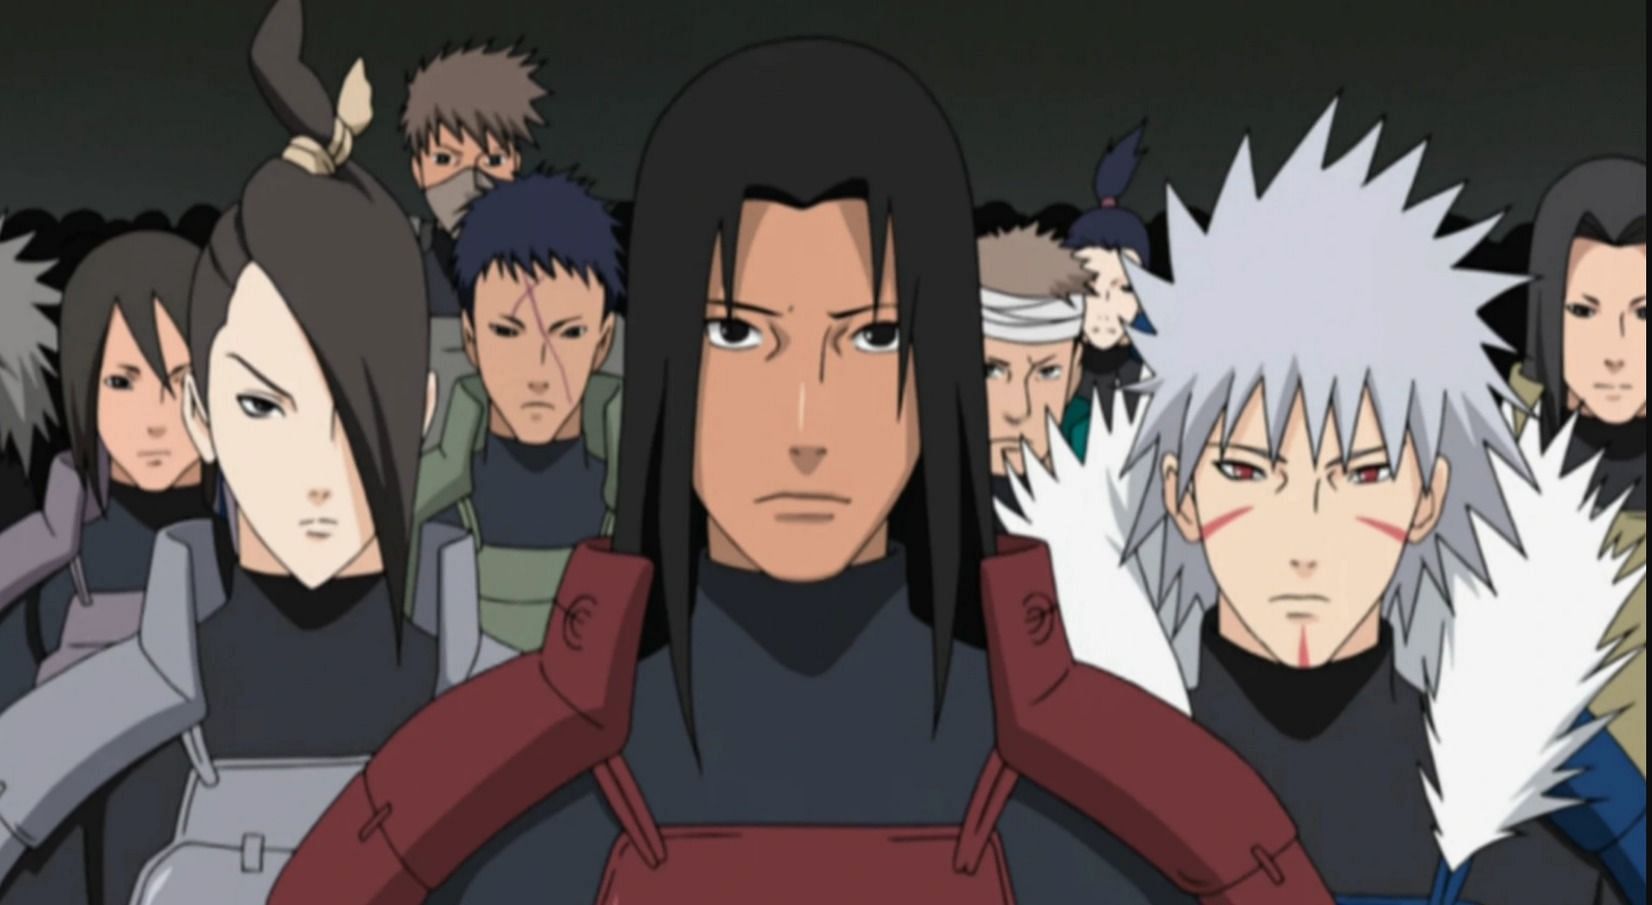 Uzumaki and Senju Clan in Naruto (Image Credit: Pierrot Studios)